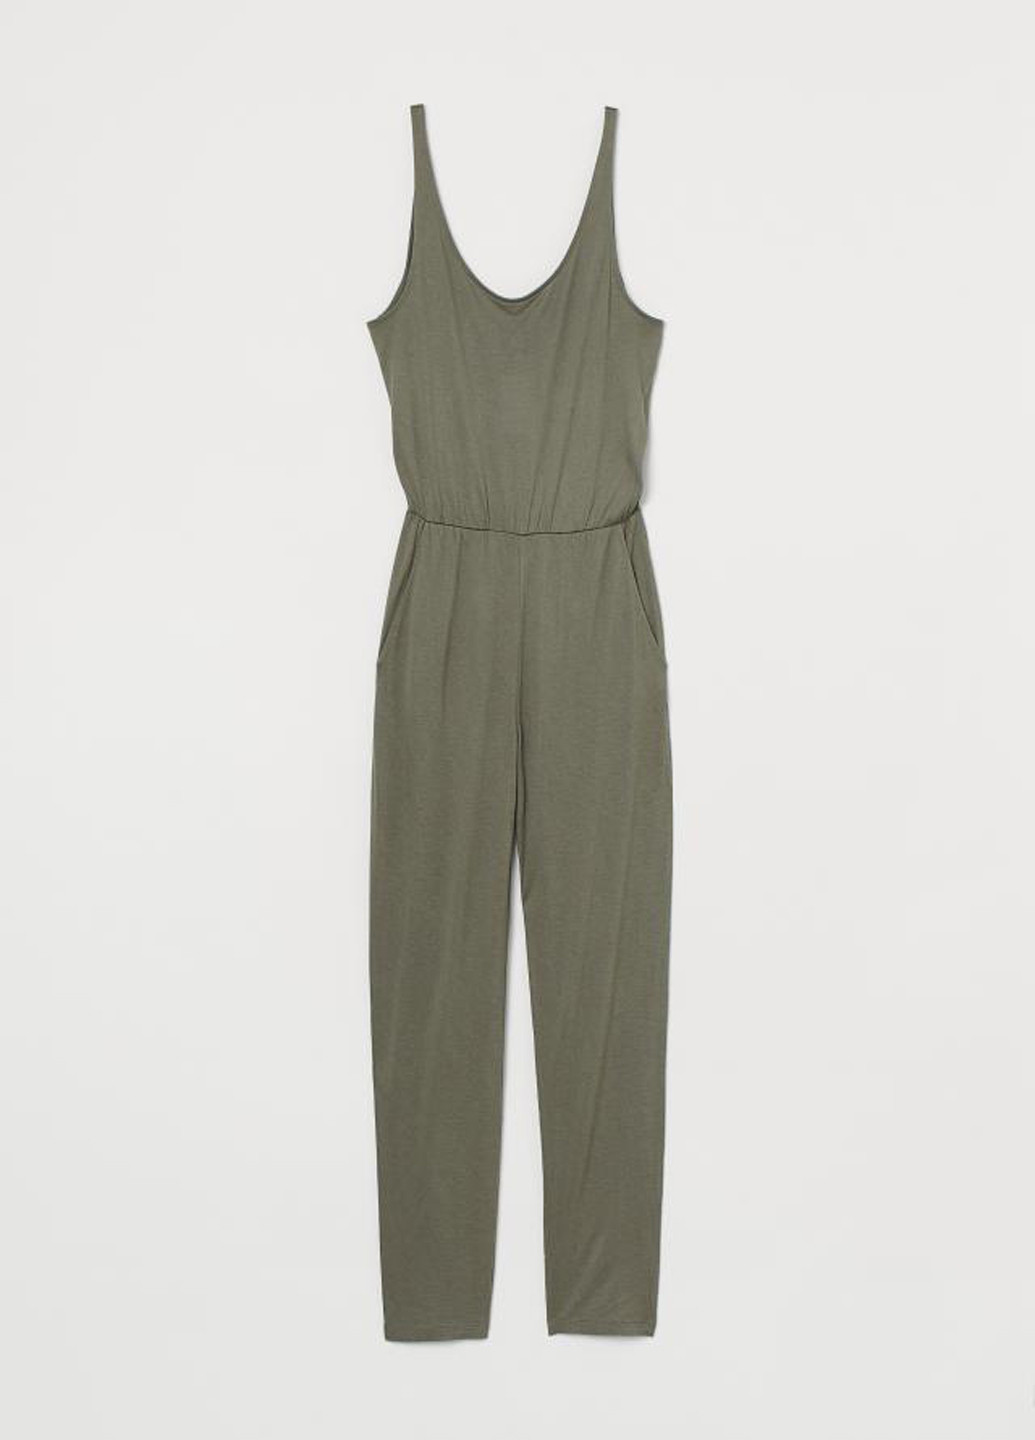 Комбинезон H&M комбинезон-брюки однотонный зелёный кэжуал